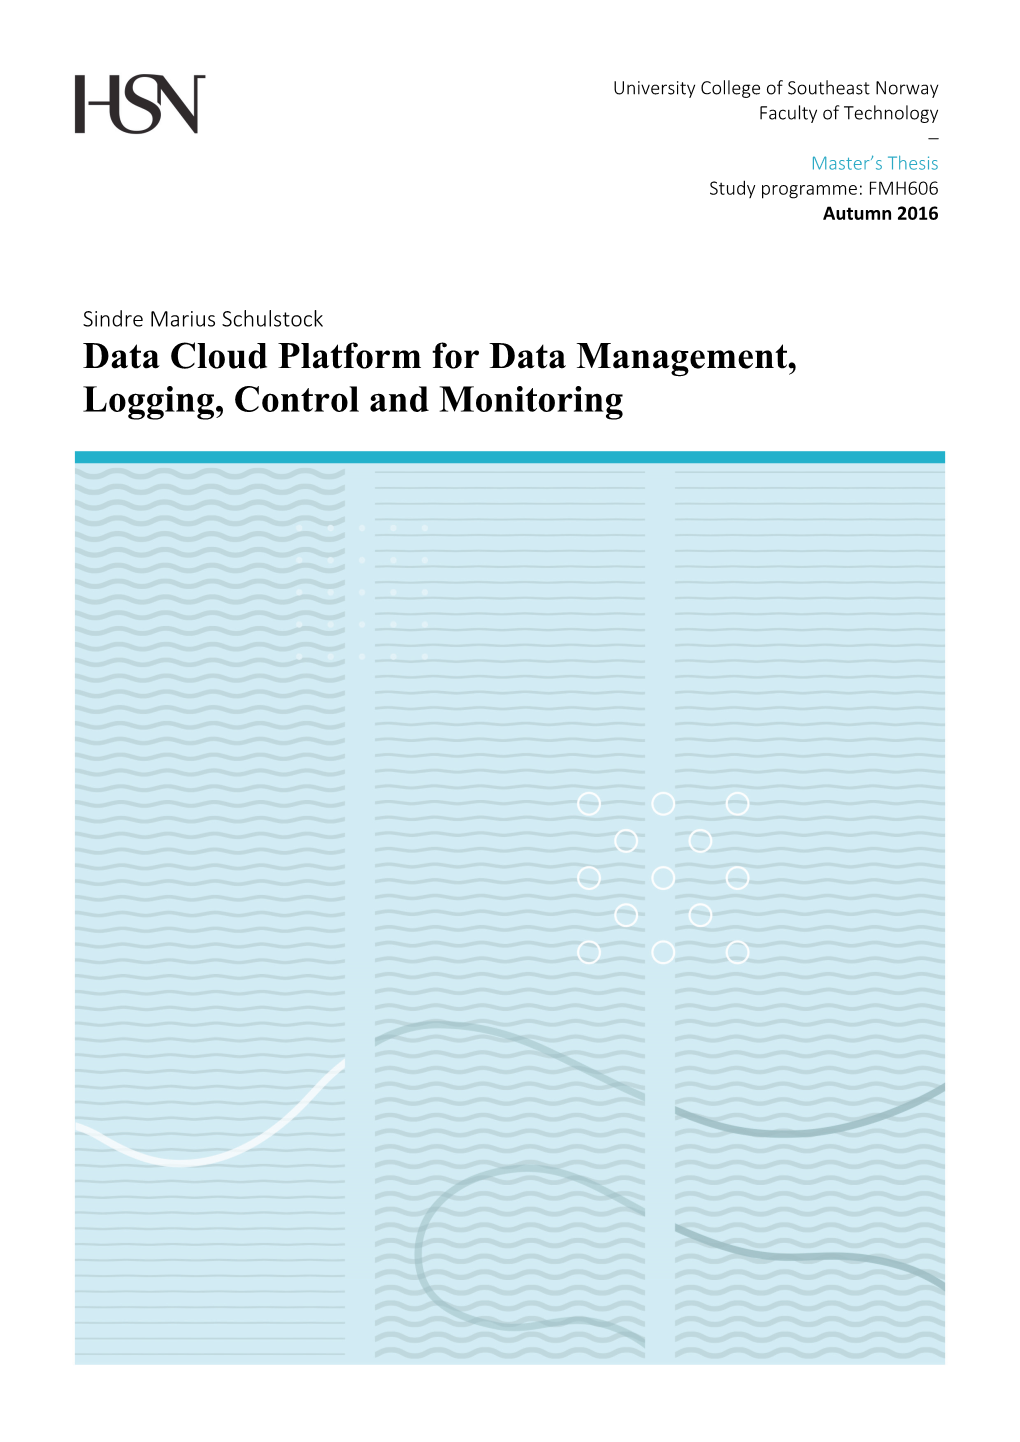 Data Cloud Platform for Data Management, Logging, Control and Monitoring